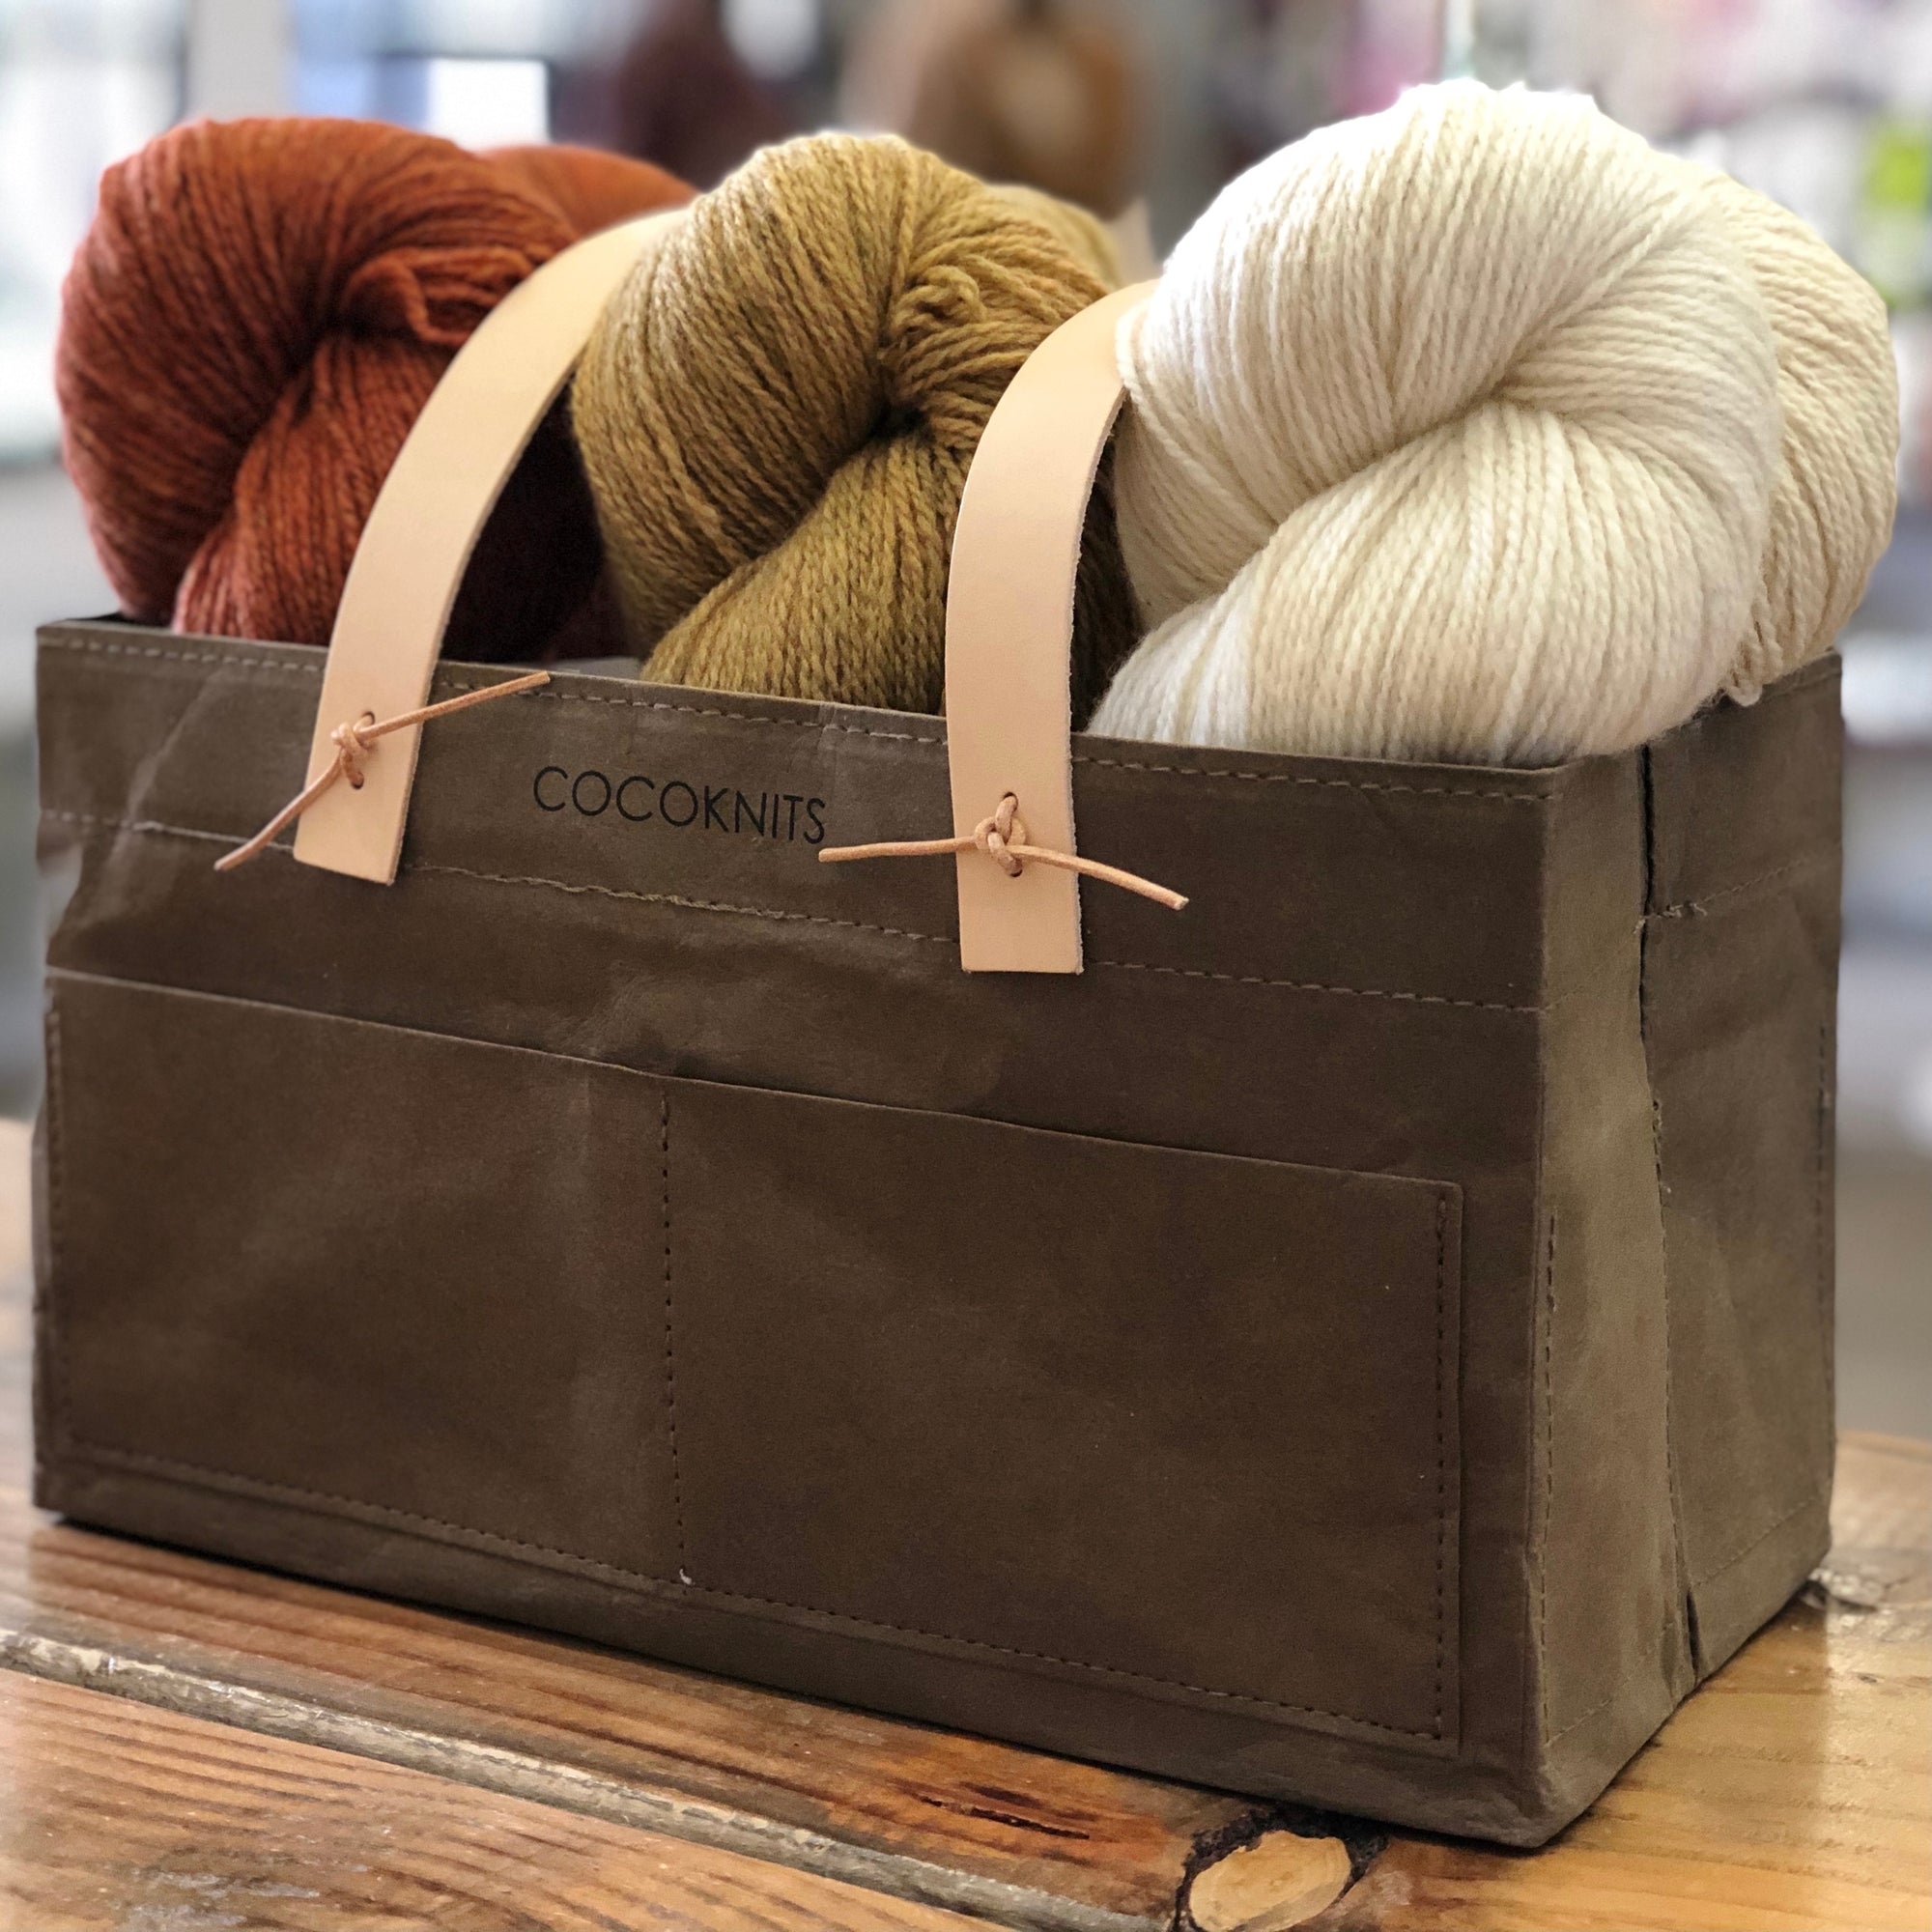 Knitpro The Bloom Doctor Bag - Ultimate Knitting Bag! | The Ribbon Rose